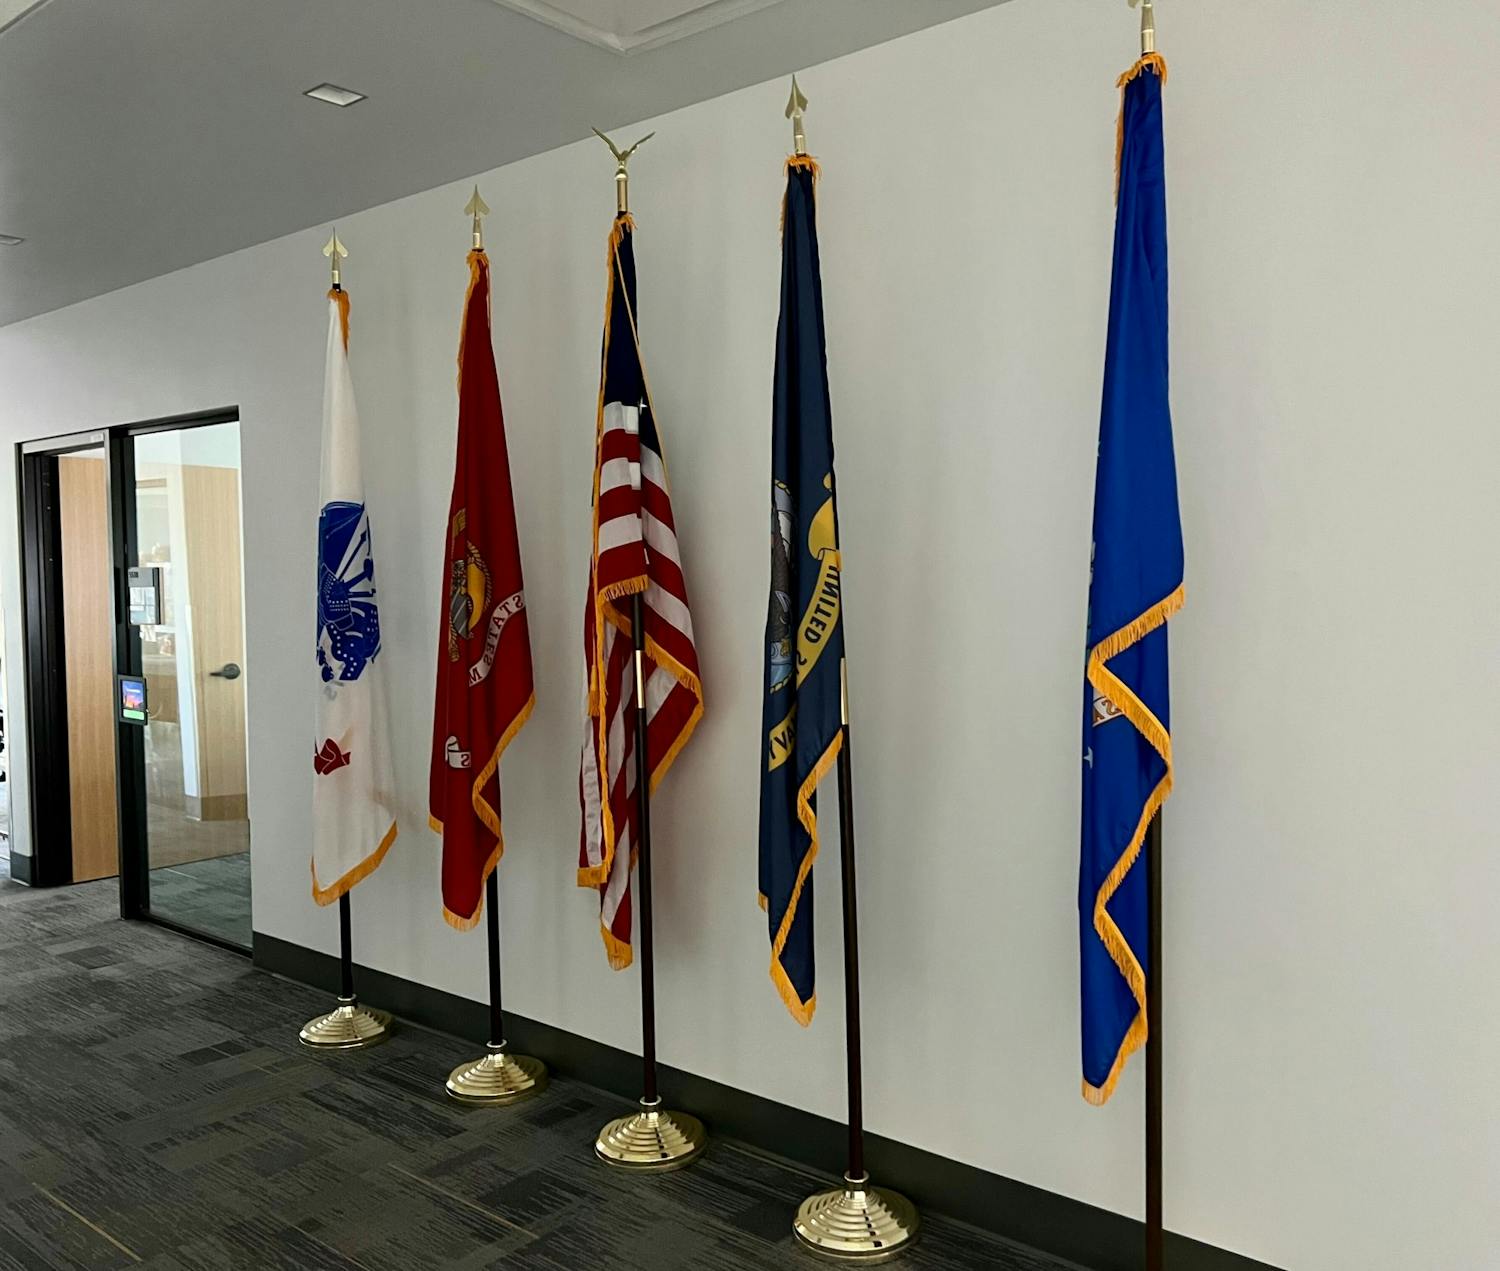 Tillman veterans center opens at ASU, Arizona